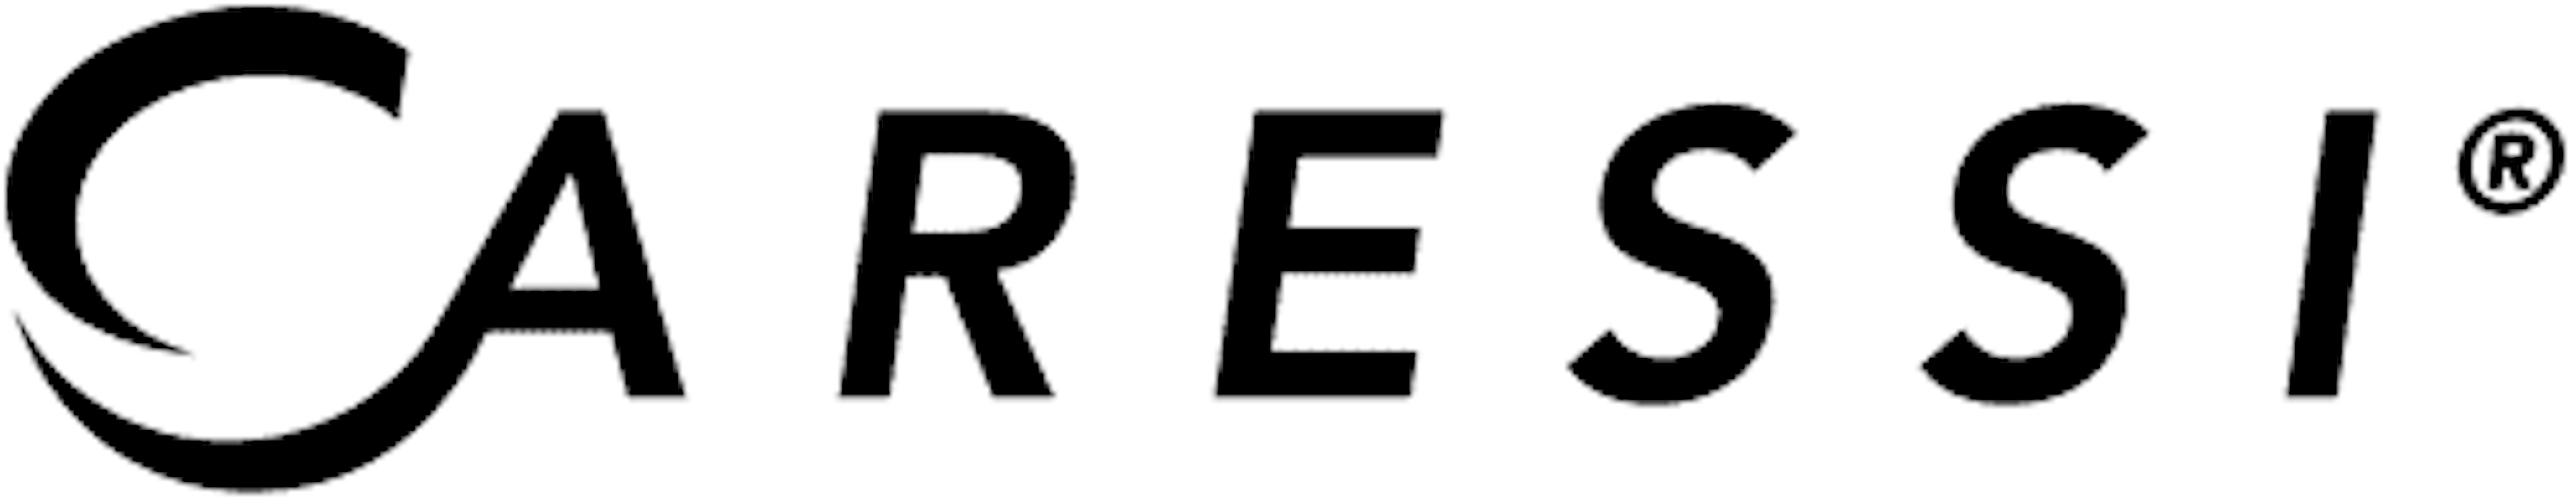 Caressi logo